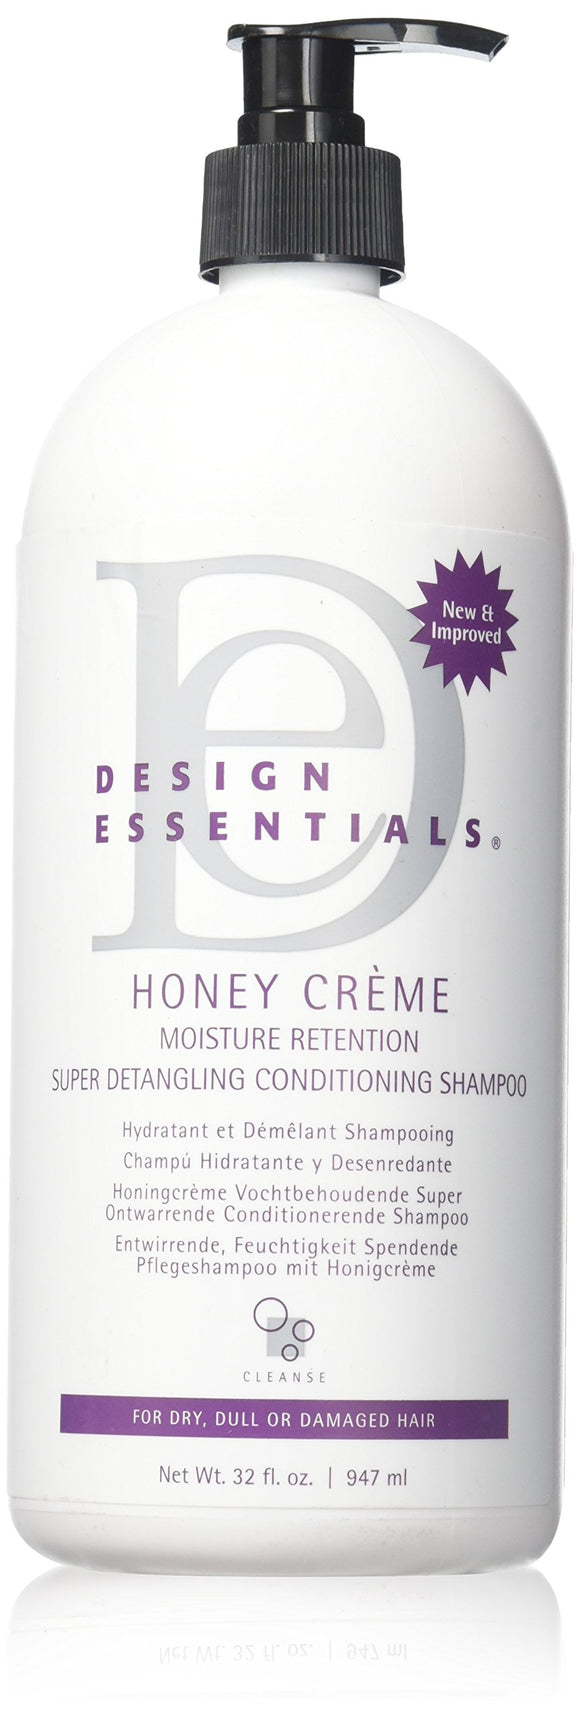 Design Essentials Neutralizing Conditioning Shampoo - Milk & Honey (Size :  32 oz)